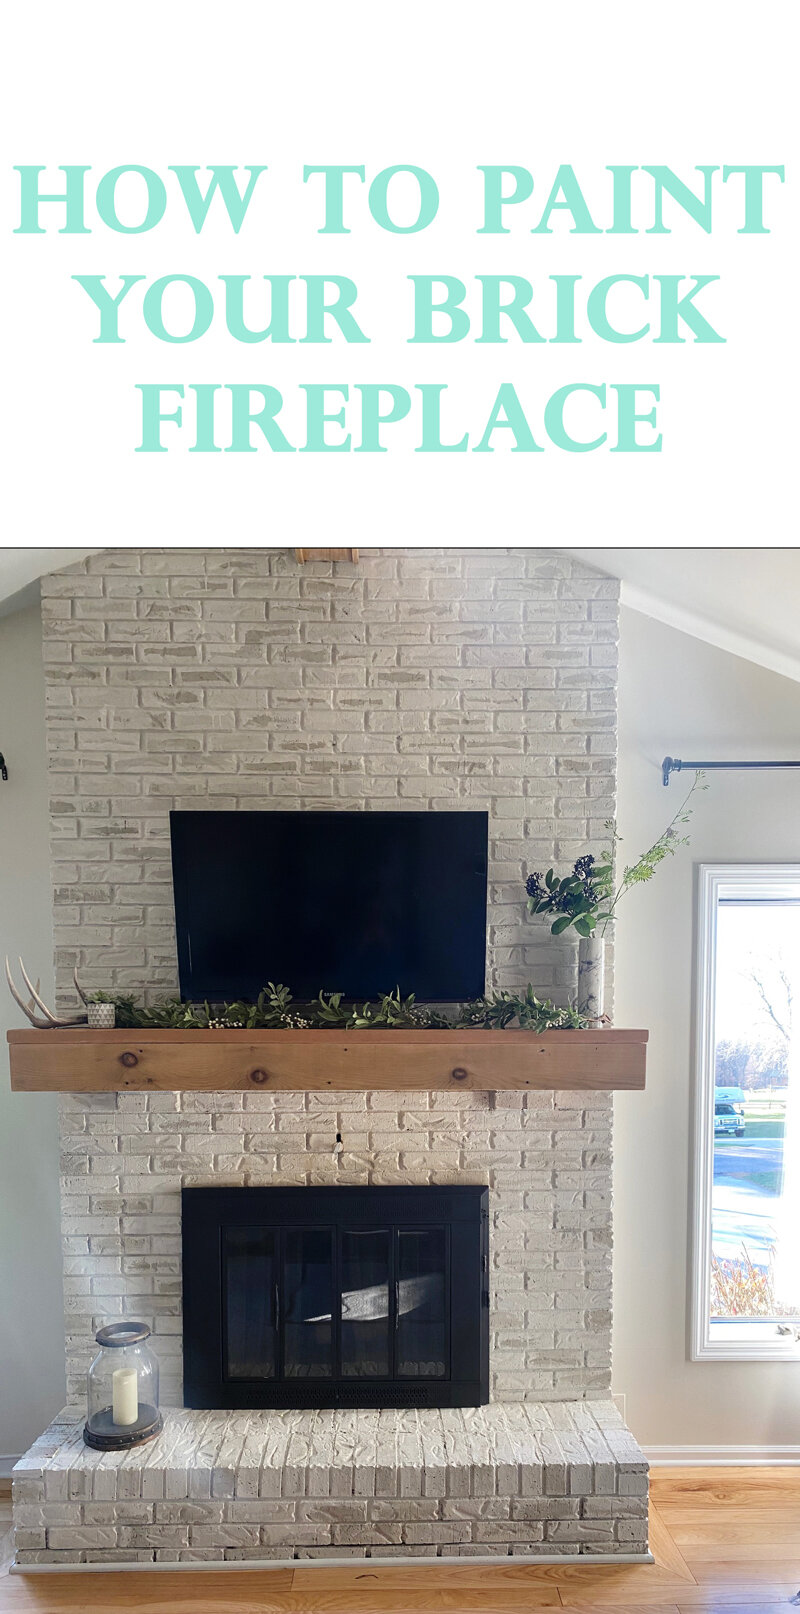 My Painted Brick Fireplace Diy Tutorial, Paint To Use On Brick Fireplace